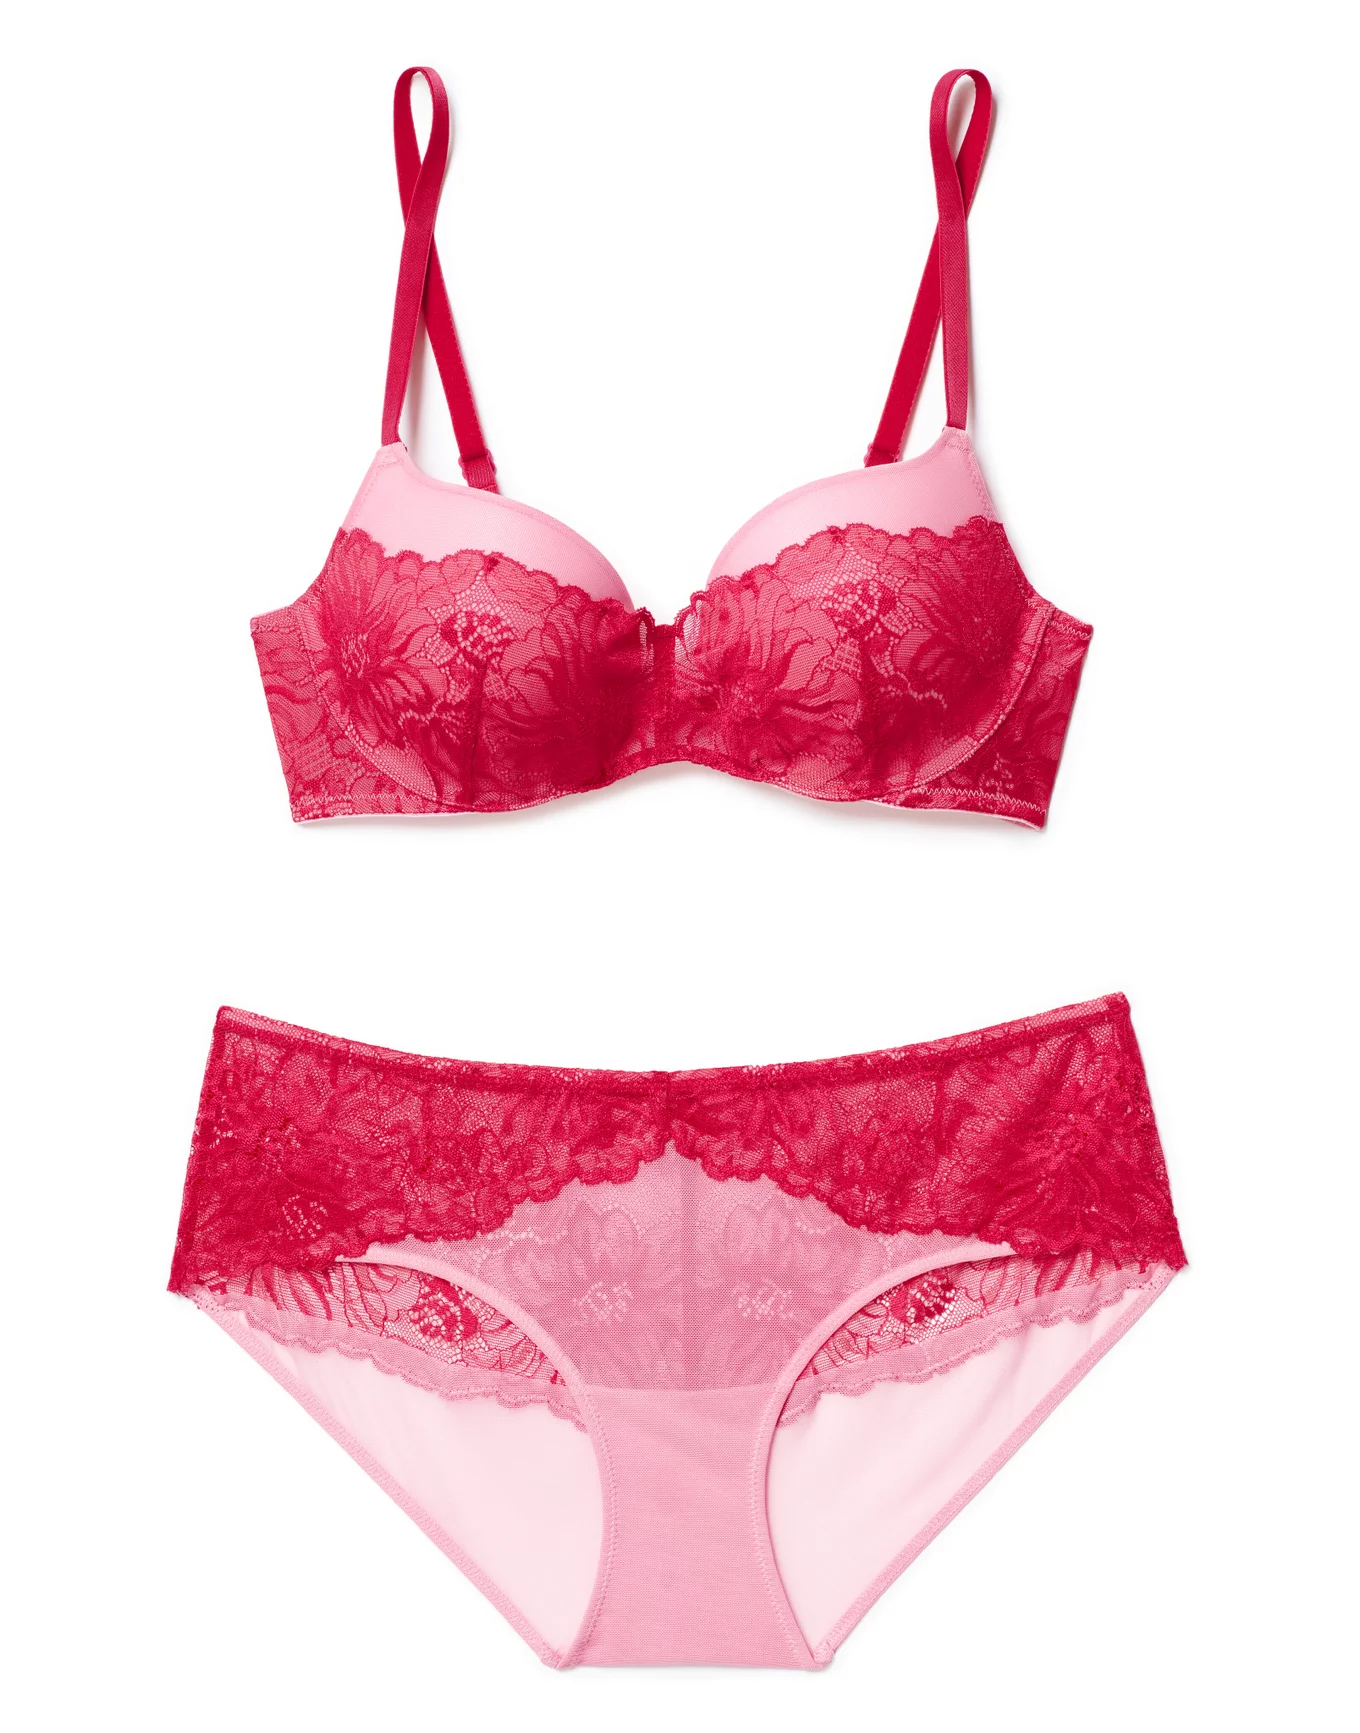 Brand new Victoria Secret Pink bra 32A  Victoria secret pink bras, Pink bra,  Victoria secret pink